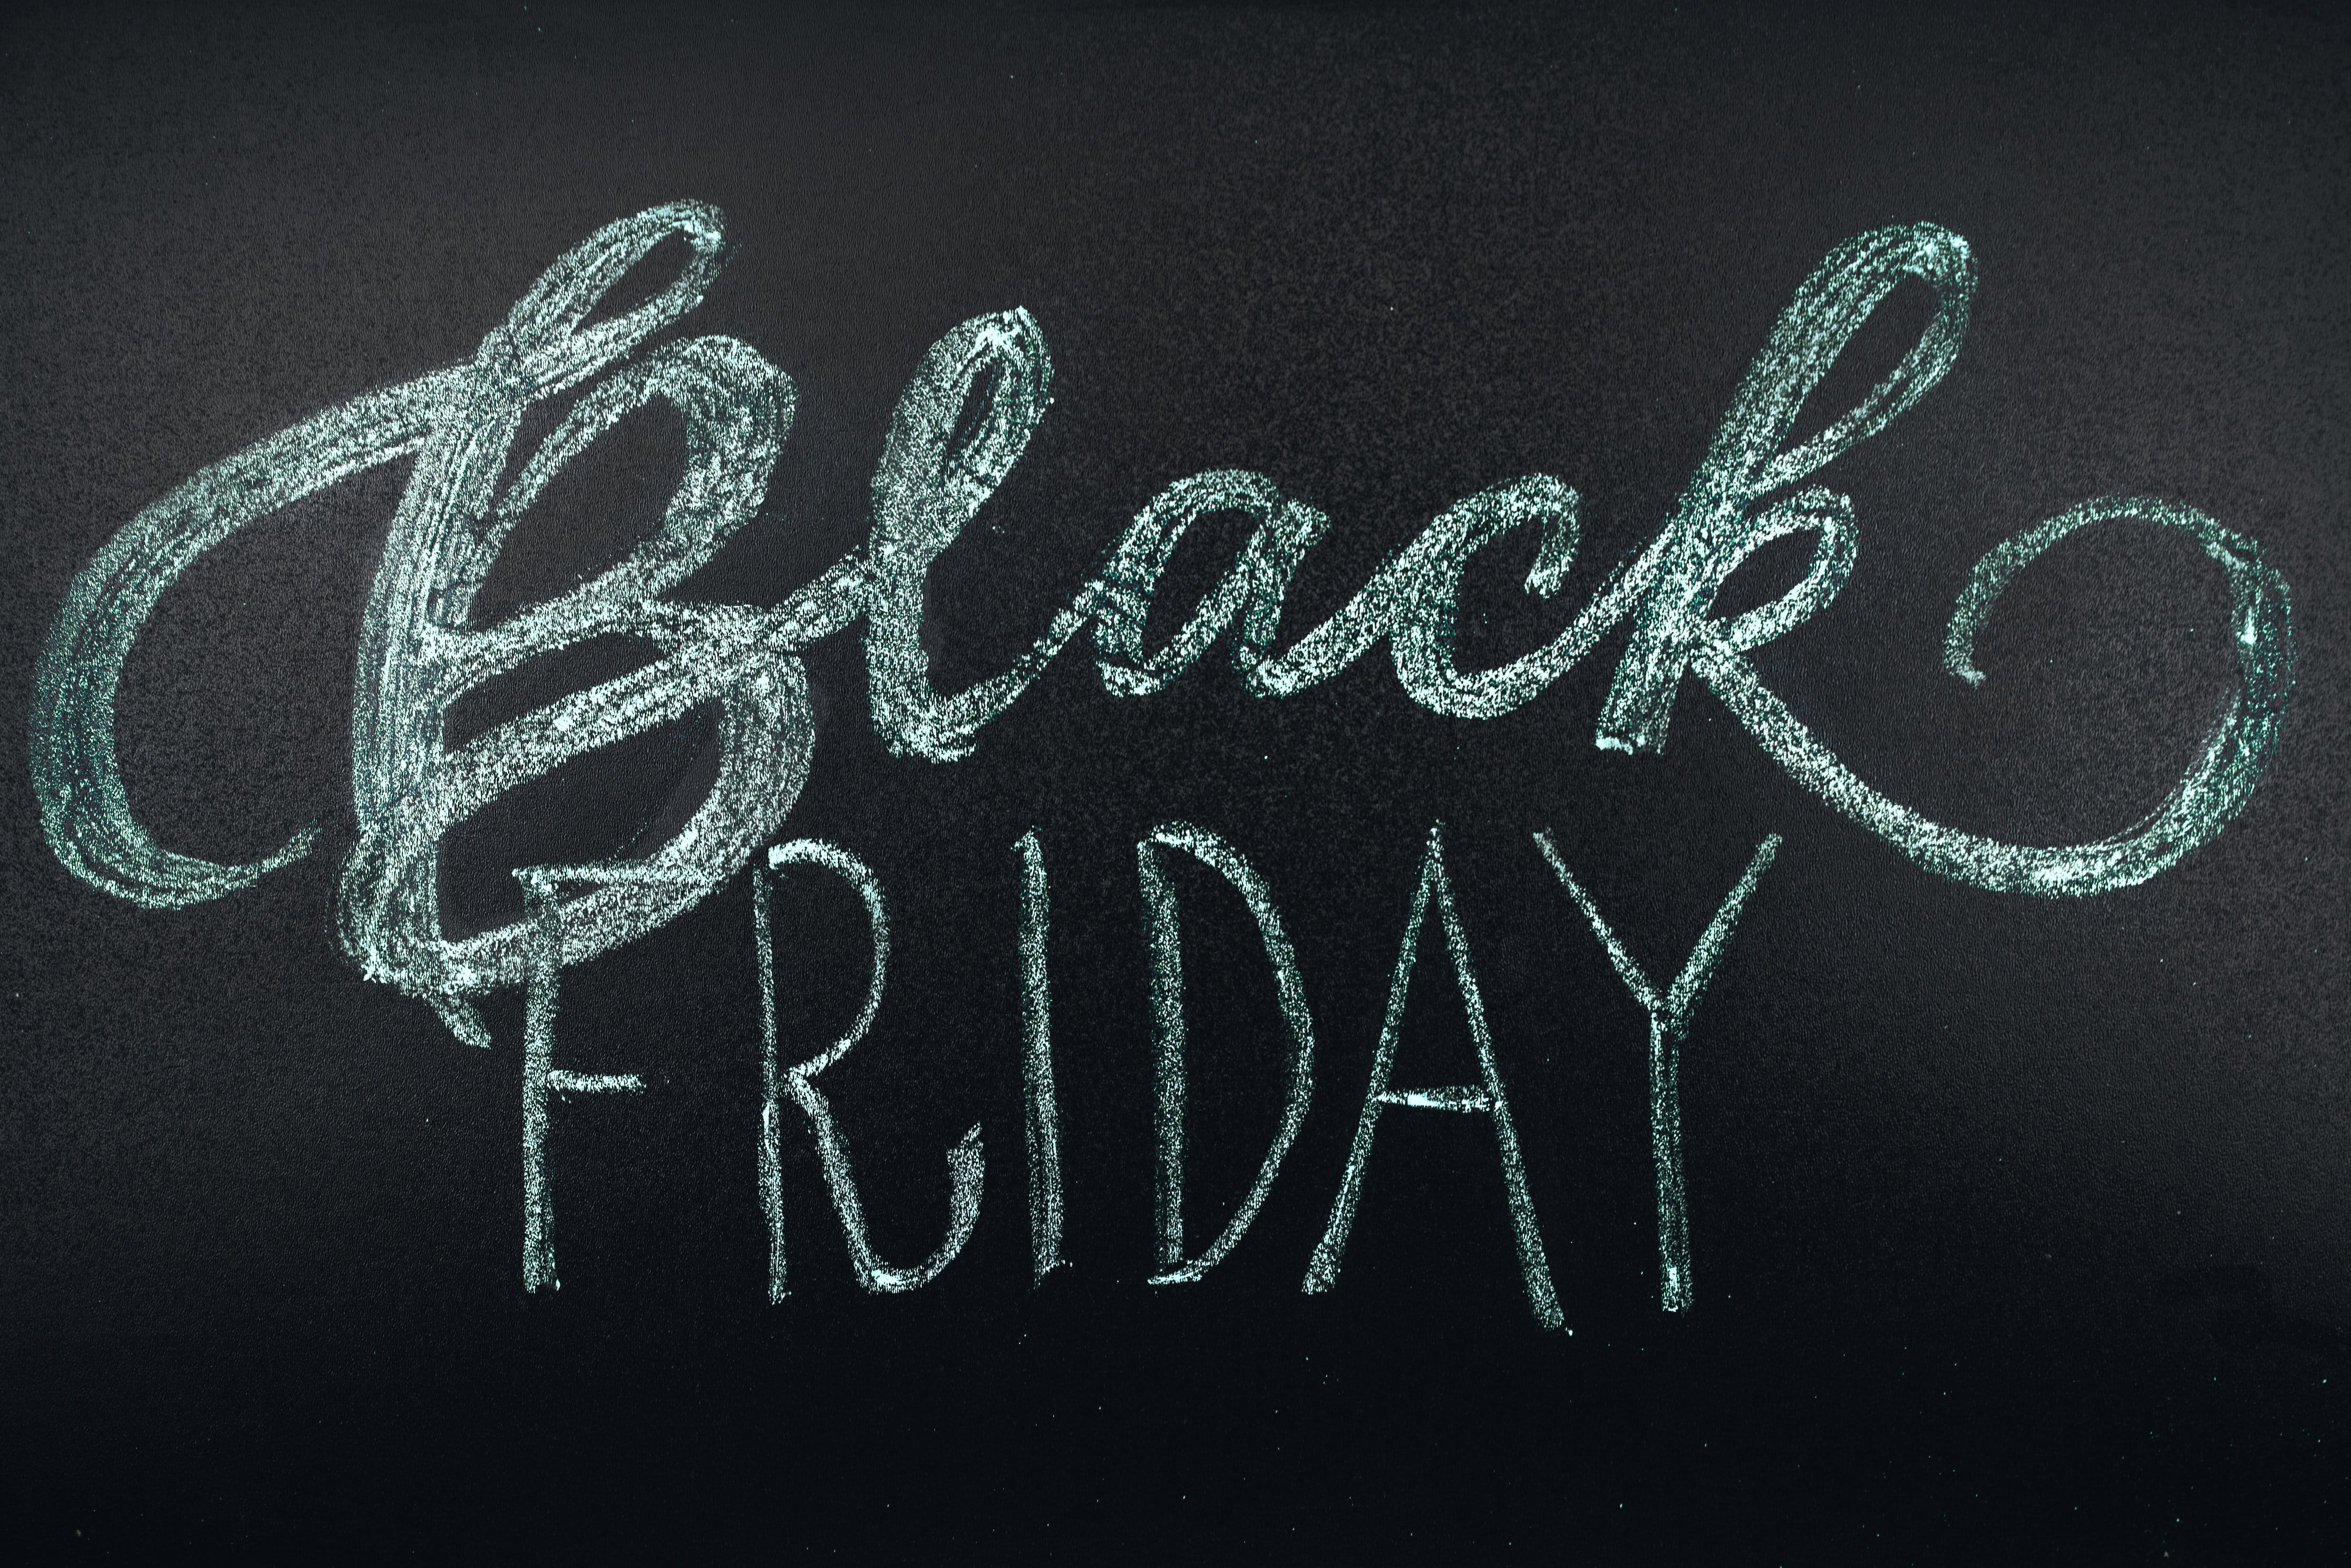 Black Friday In Chalk Photo, Black Friday Cyber Monday, Shopping